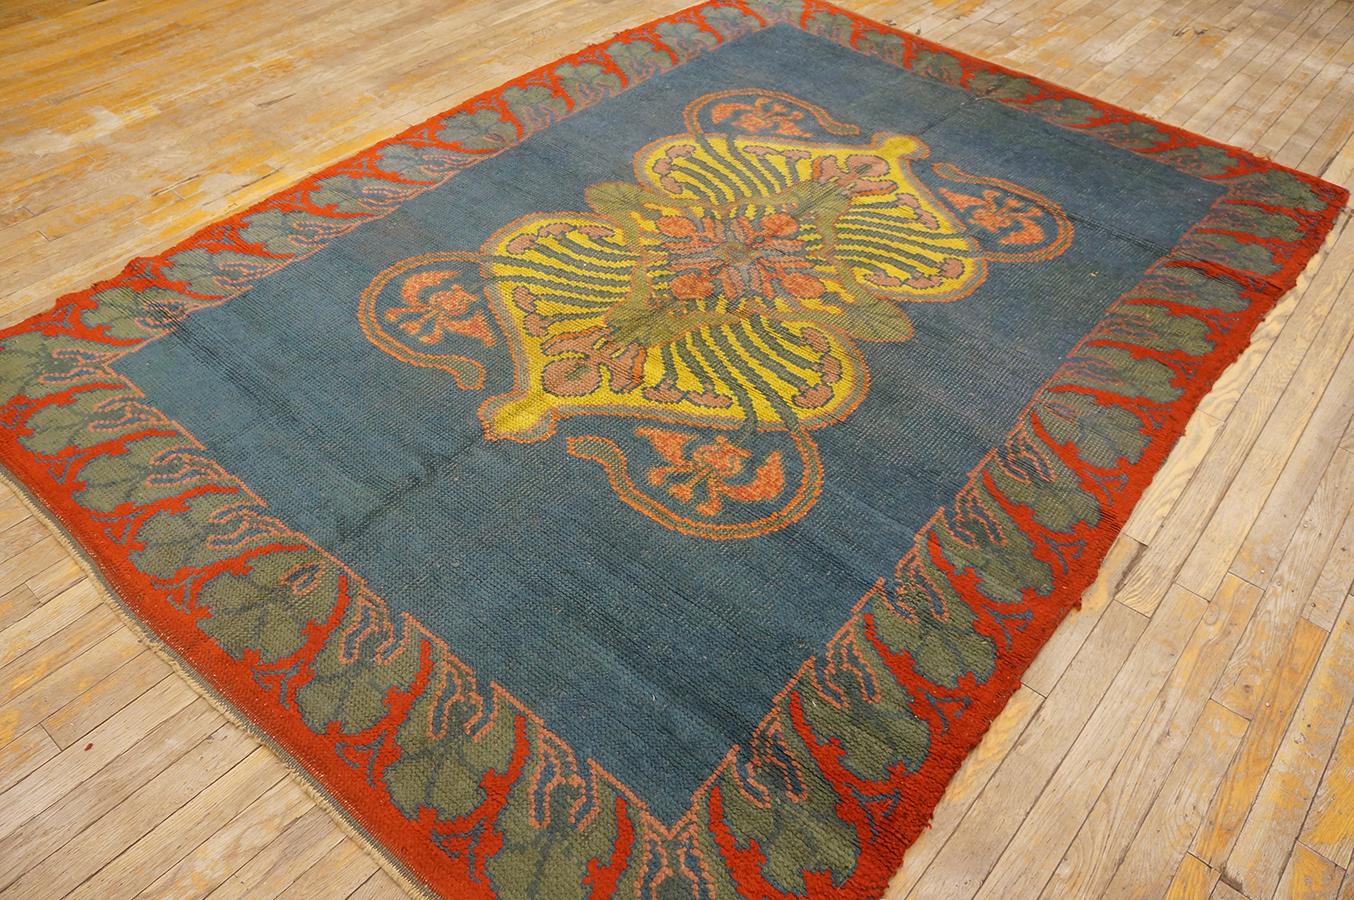 Early 20th Century Irish Donegal Arts & Crafts Carpet 
5'7